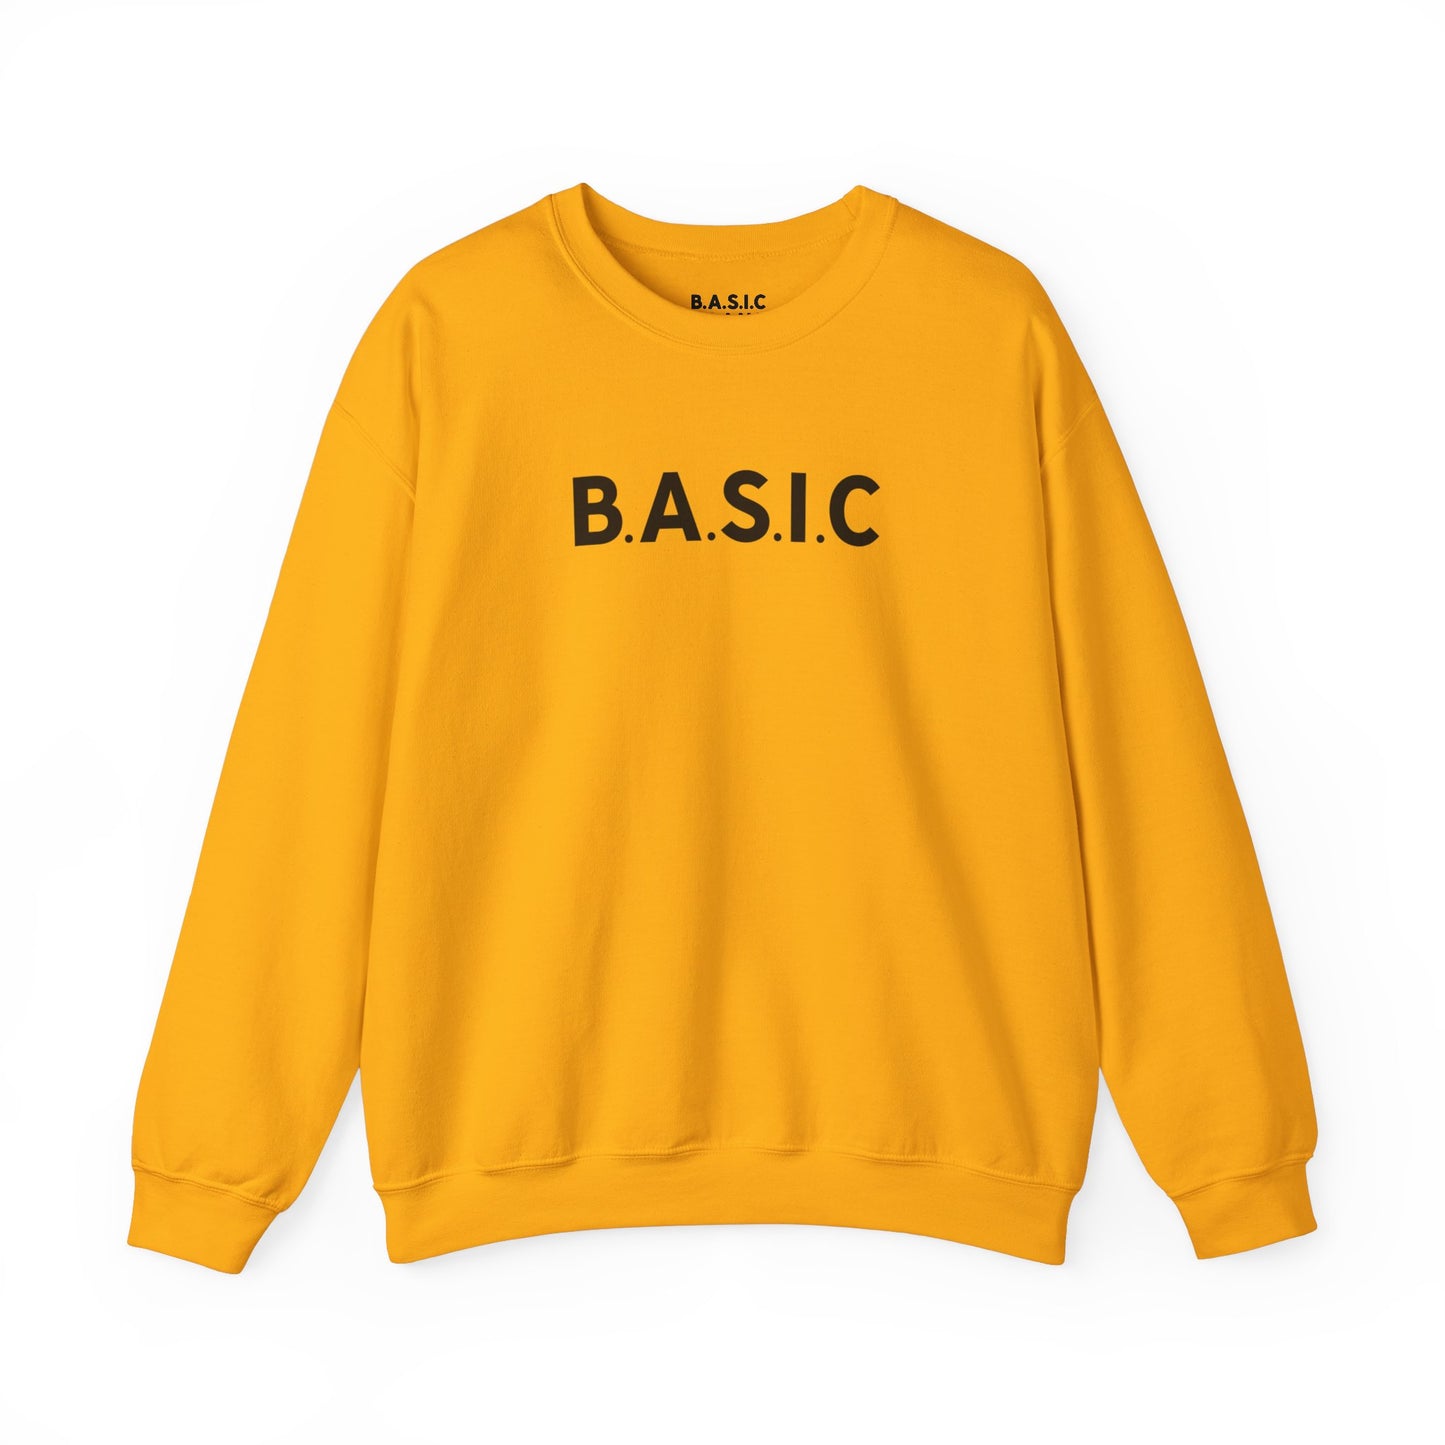 Unisex B.A.S.I.C "Medium Sized Logo" Crewneck Sweatshirt